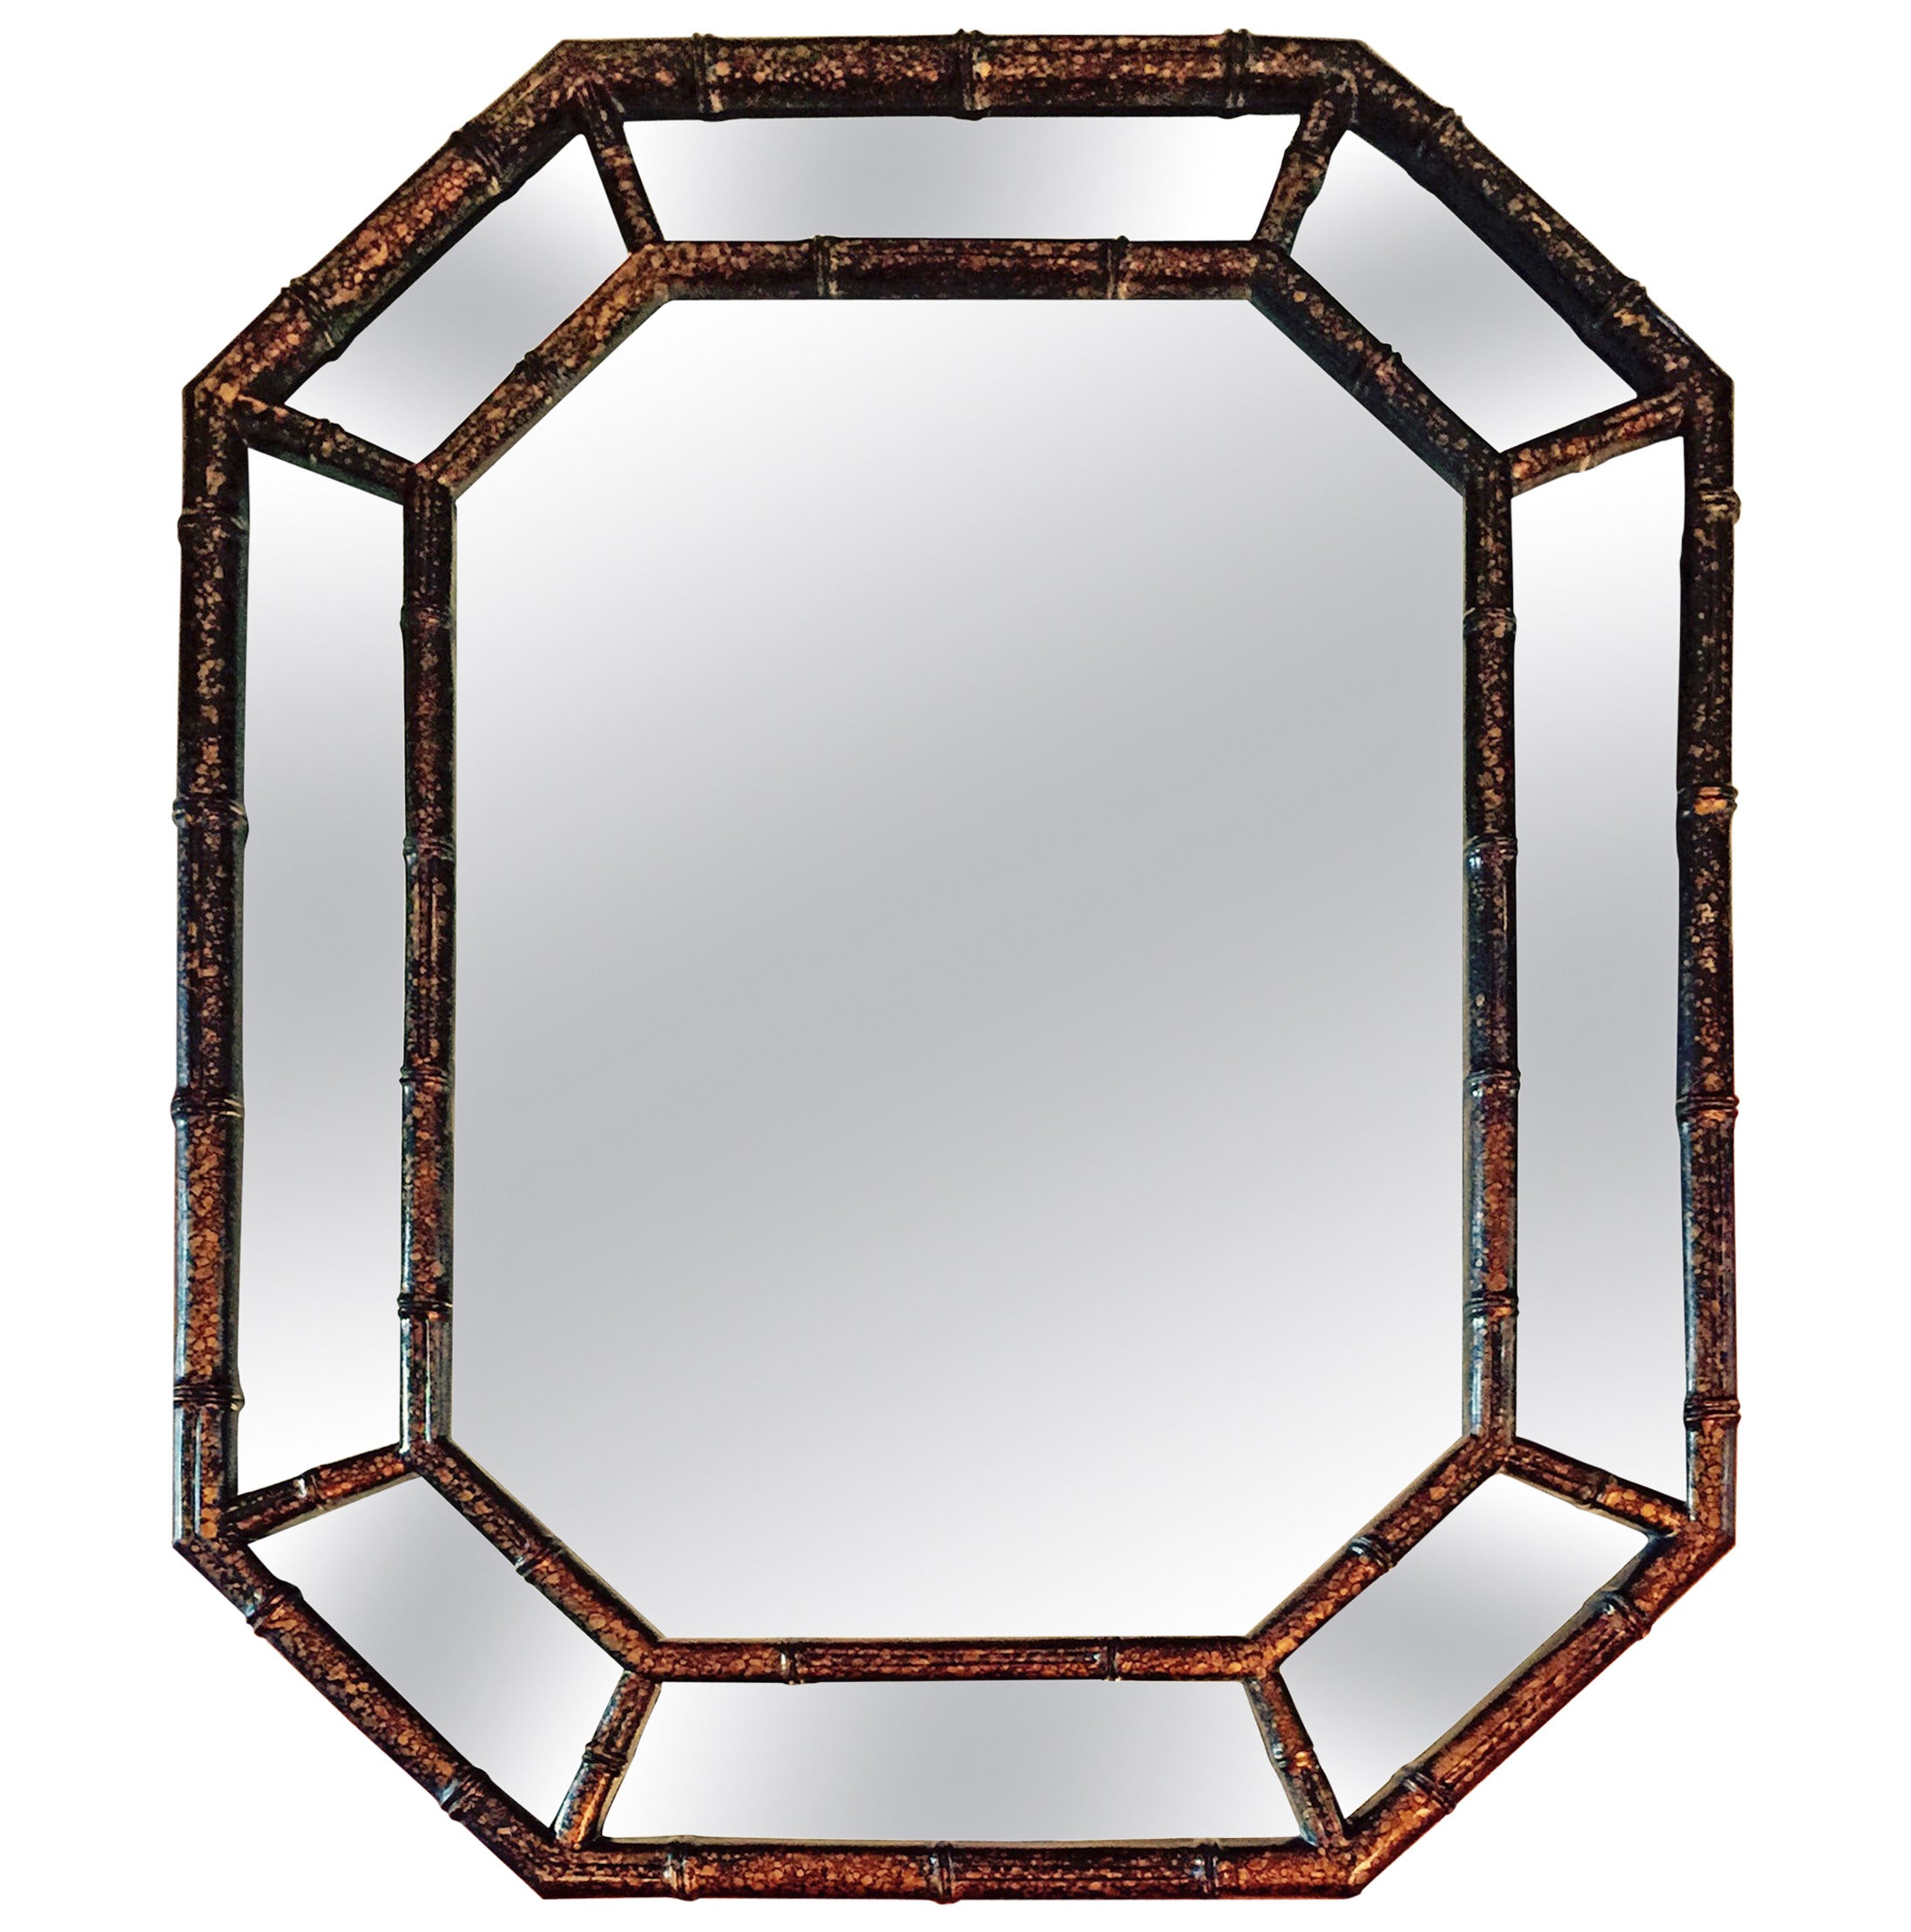 1960s Faux Toirtoiseshell Octagonal Mirror